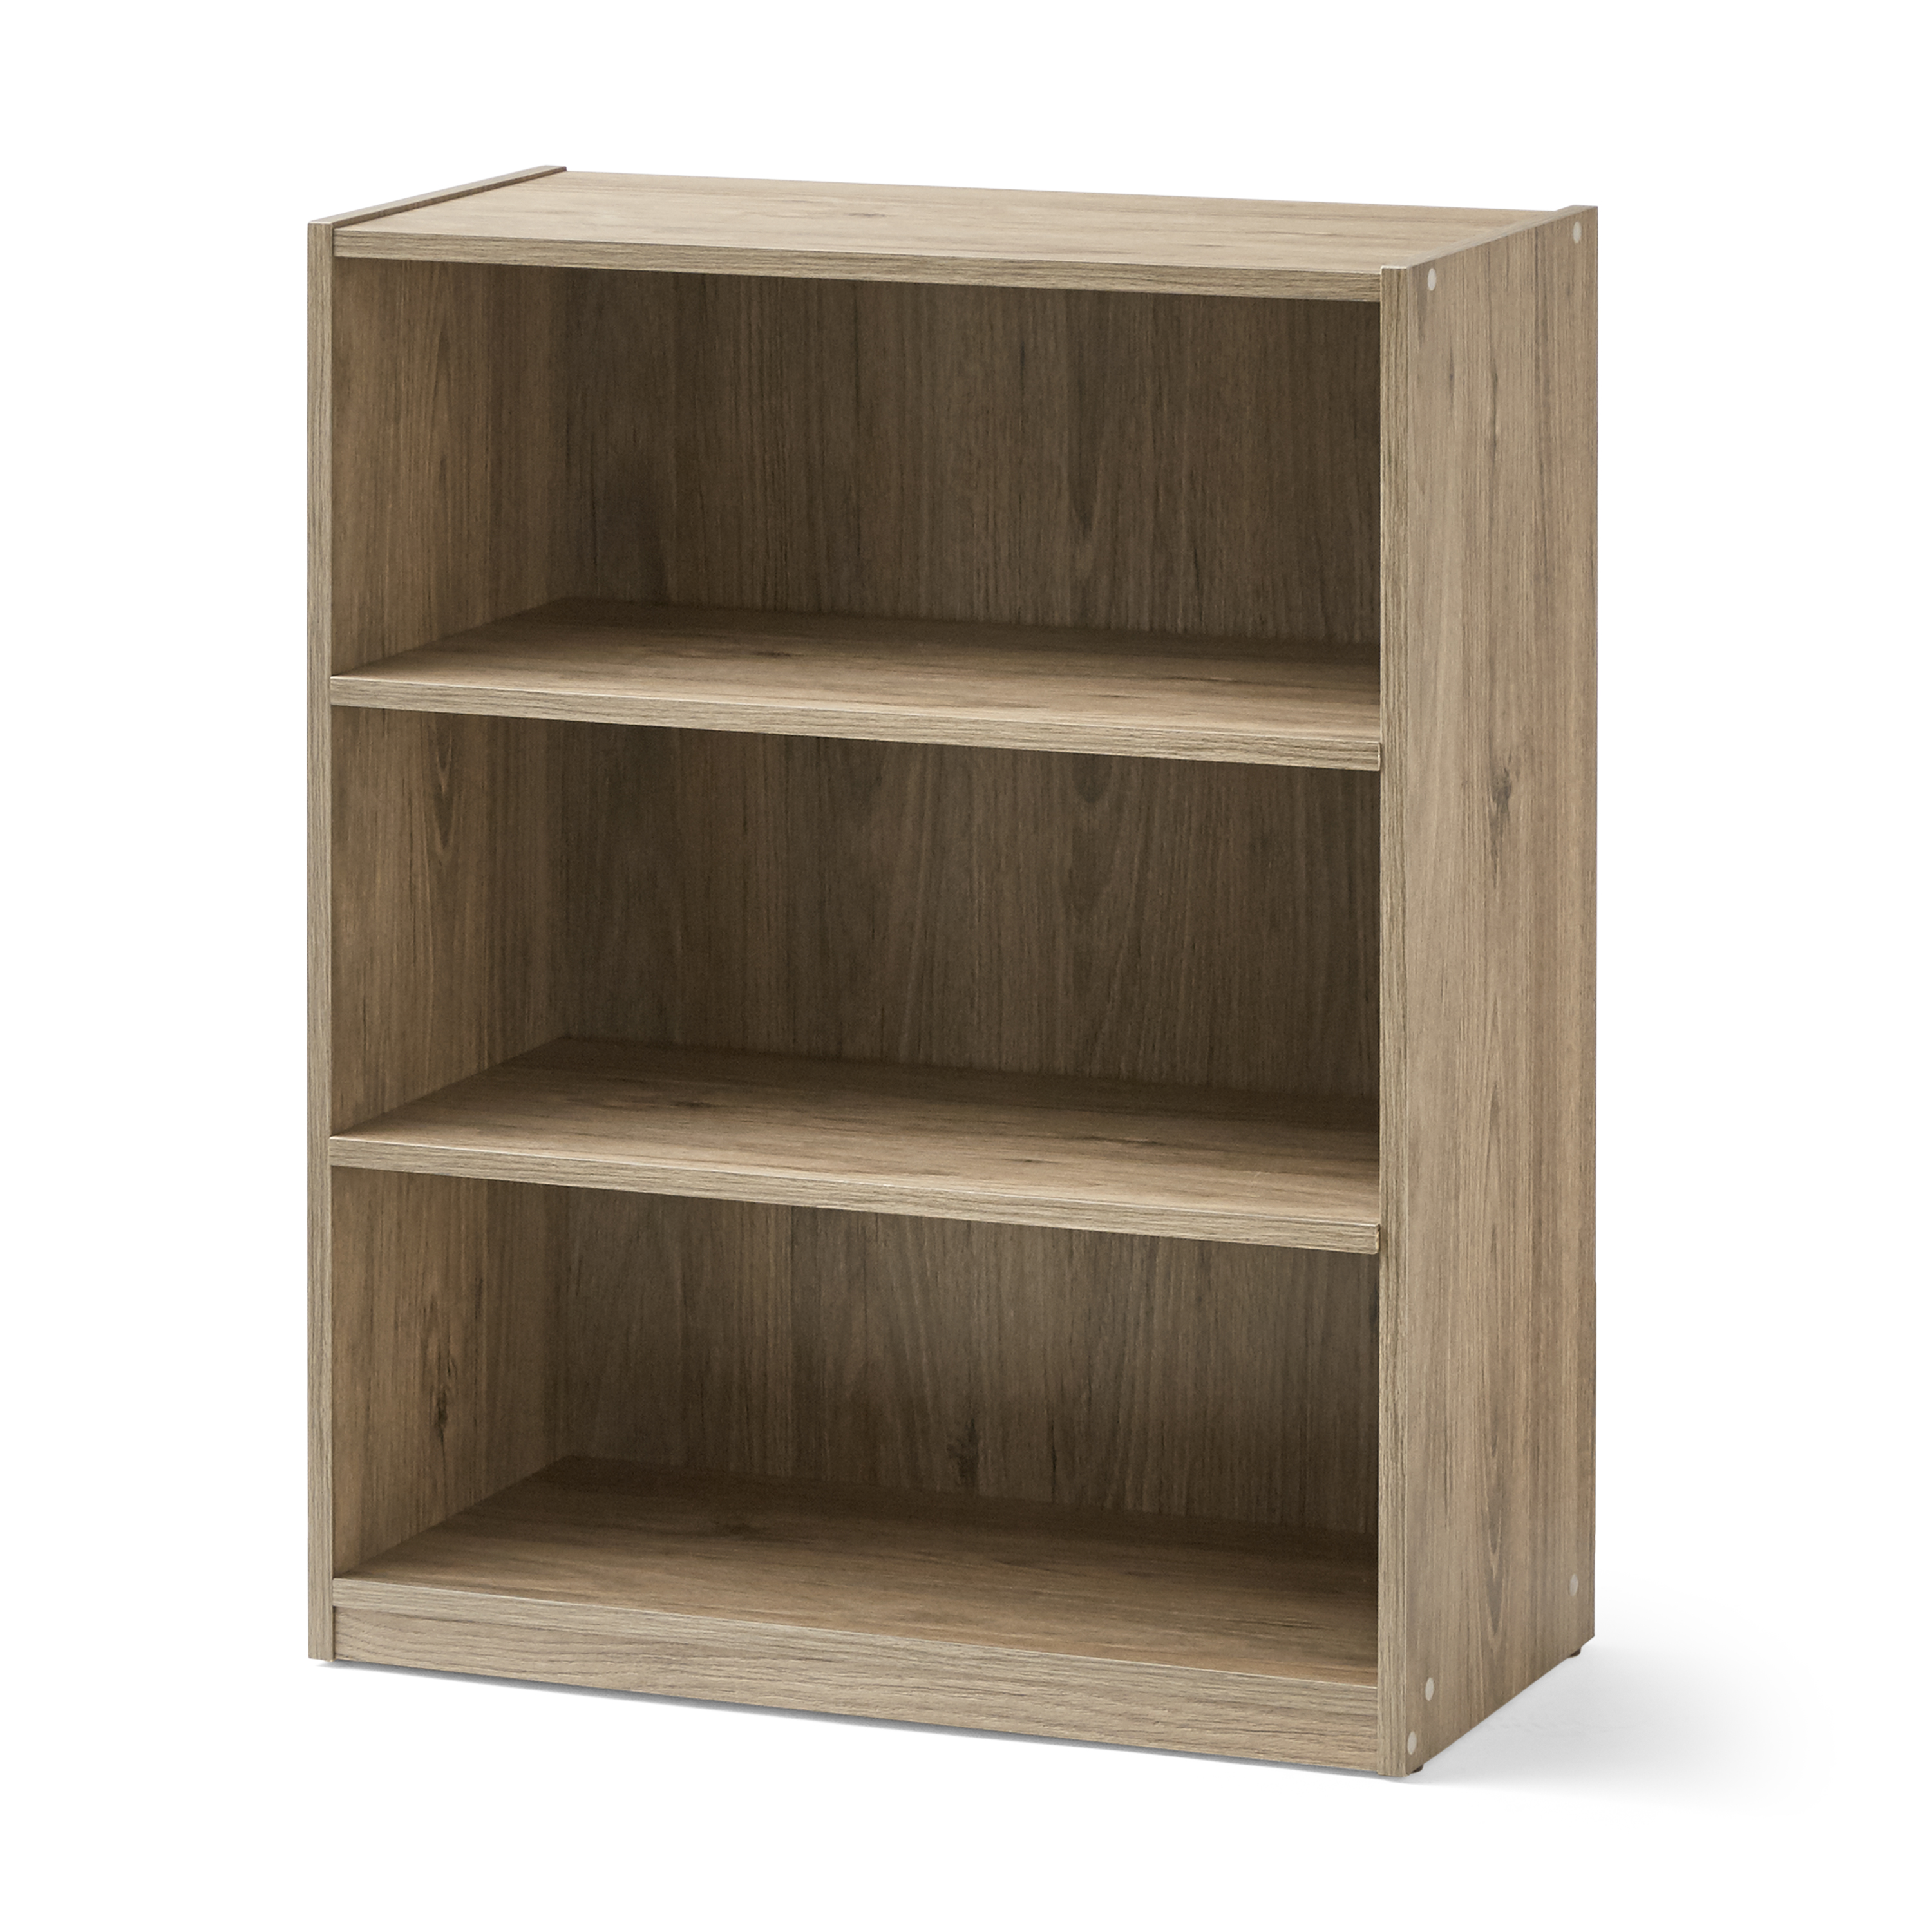 1 Fixed Shelf 2 Adjustable Shelves, White 3 Shelf Bookcase Wide